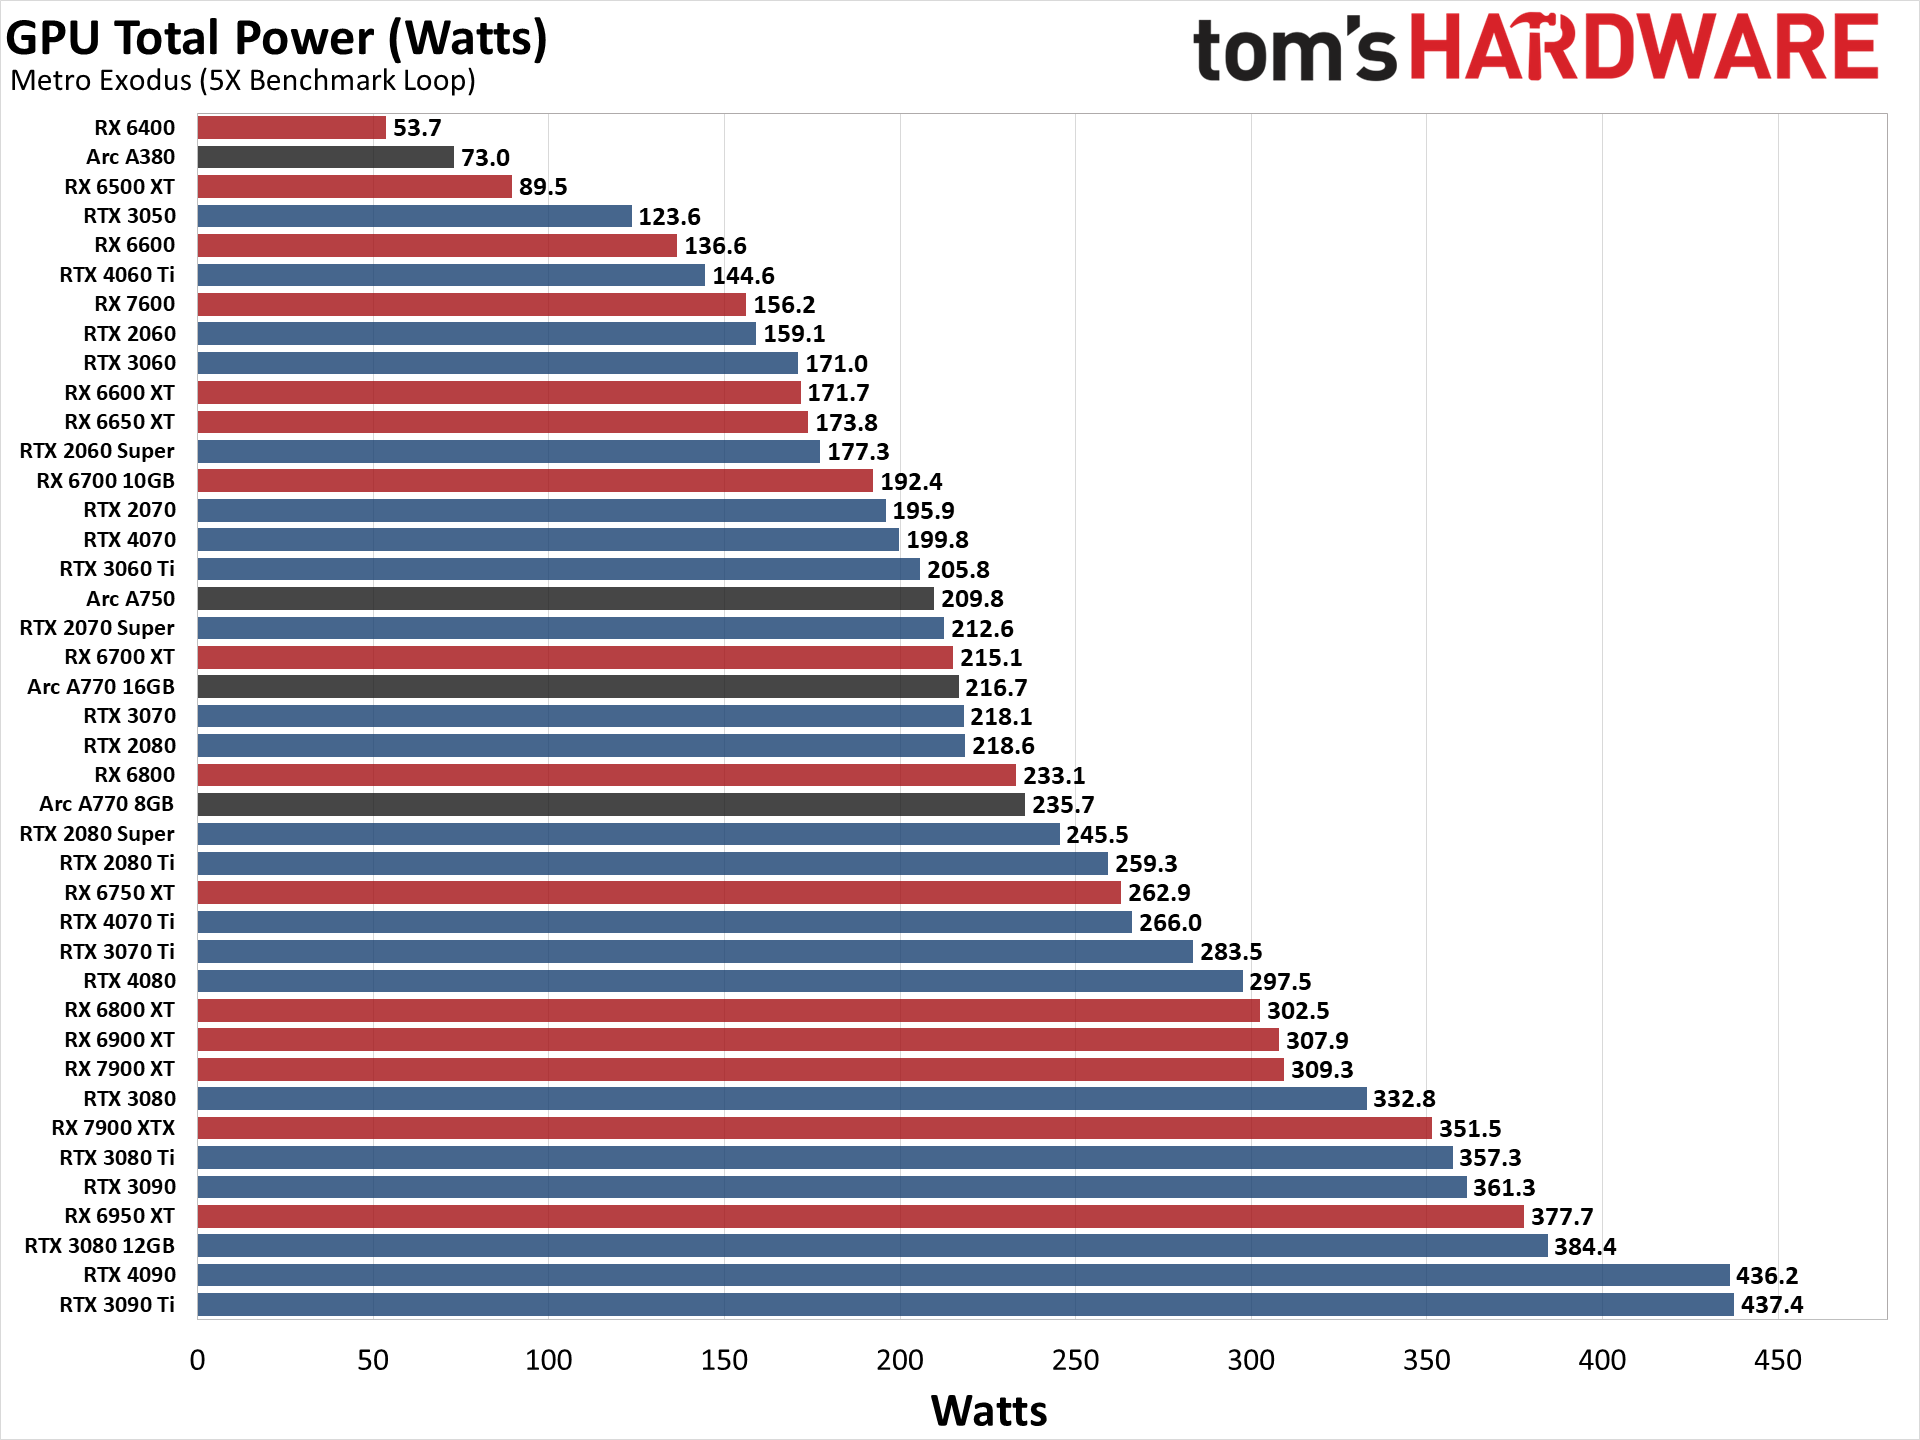 GPU benchmarks hierarchy power, clocks, temperature, fan speed charts